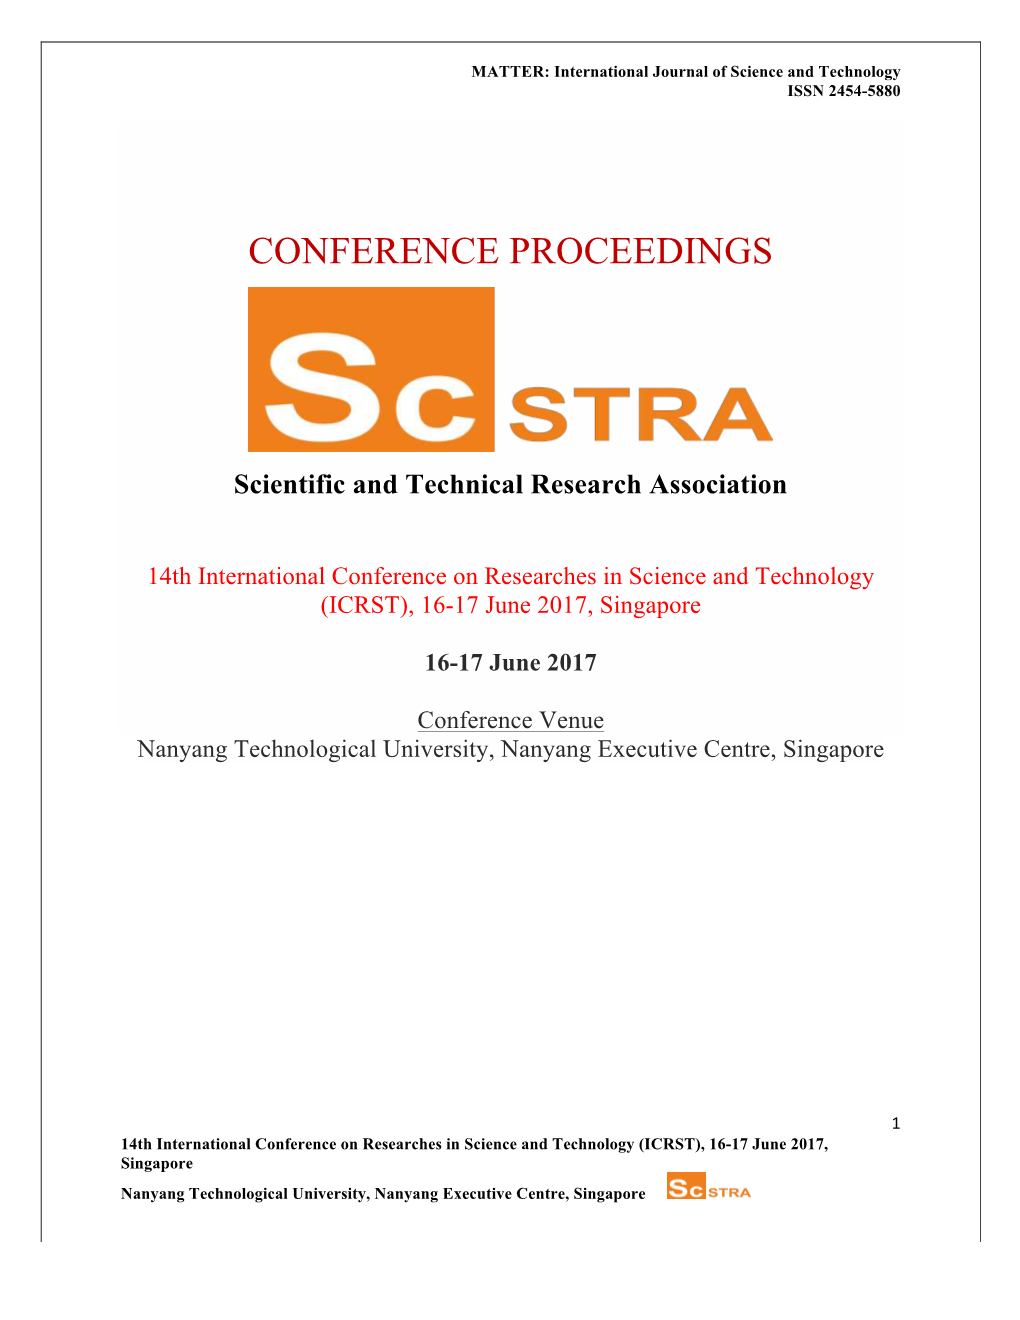 STRA International Conference, Singapore June 2017